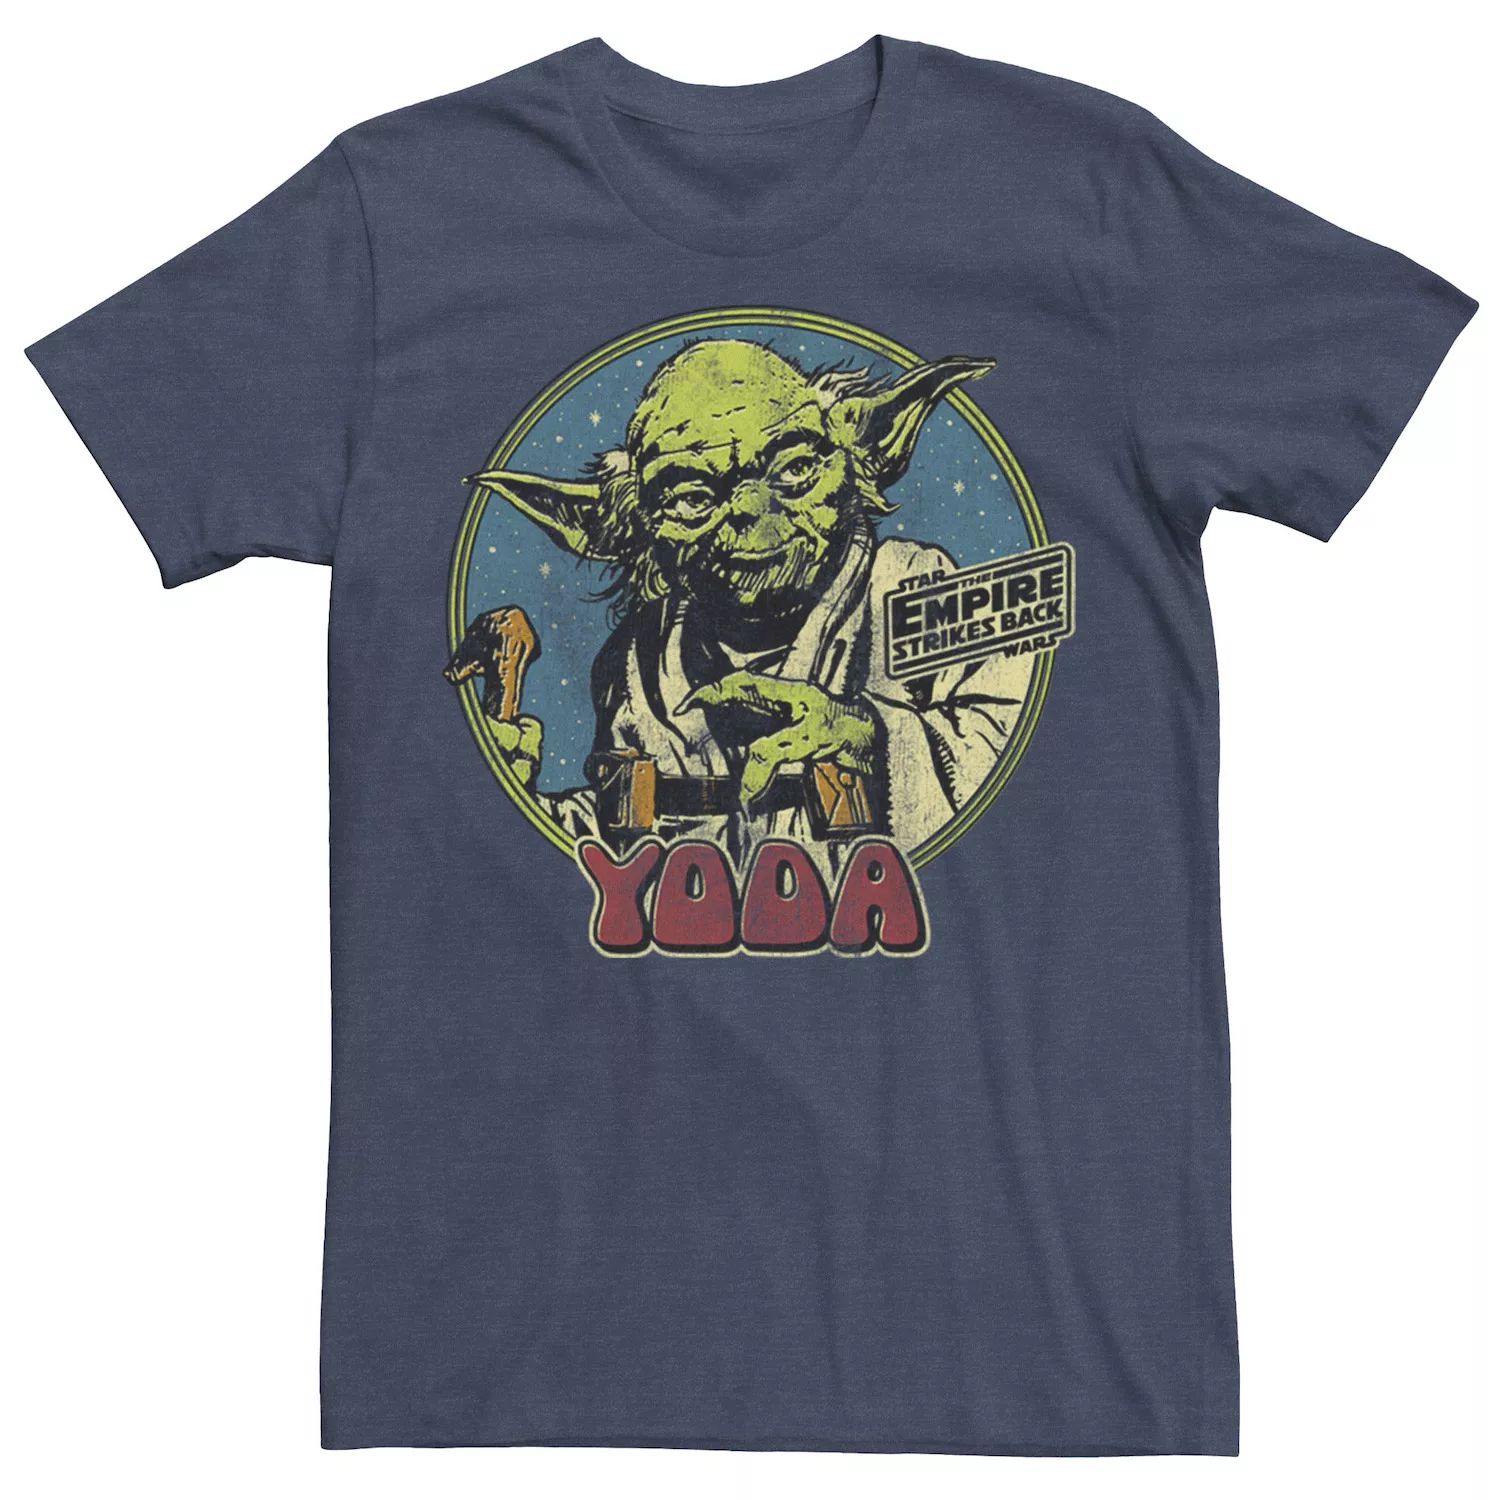 Мужская винтажная футболка с логотипом Yoda The Empire Strikes Back Star Wars